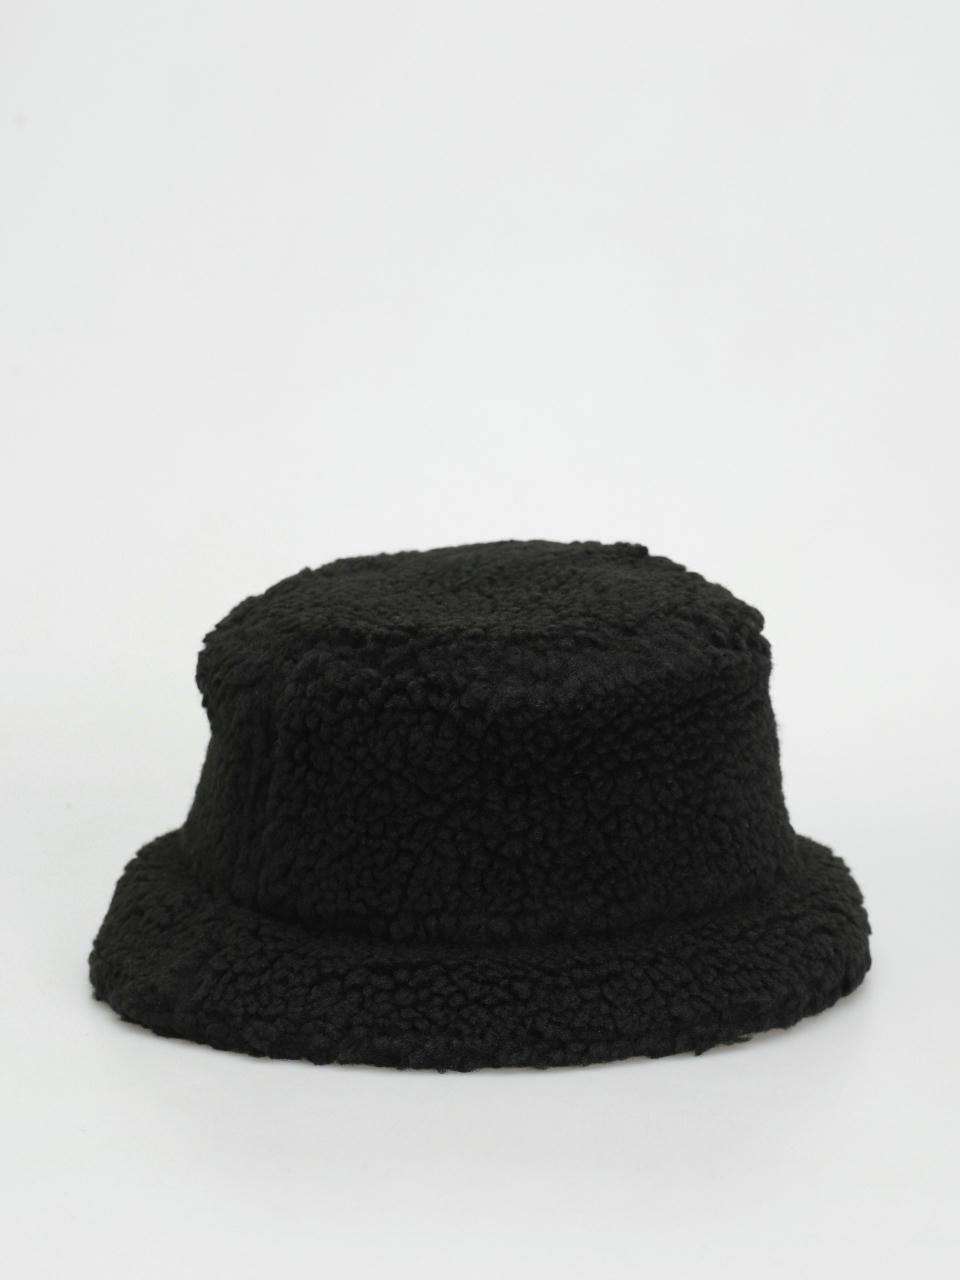 Carhartt WIP Prentis Bucket Hat - Black - M-L